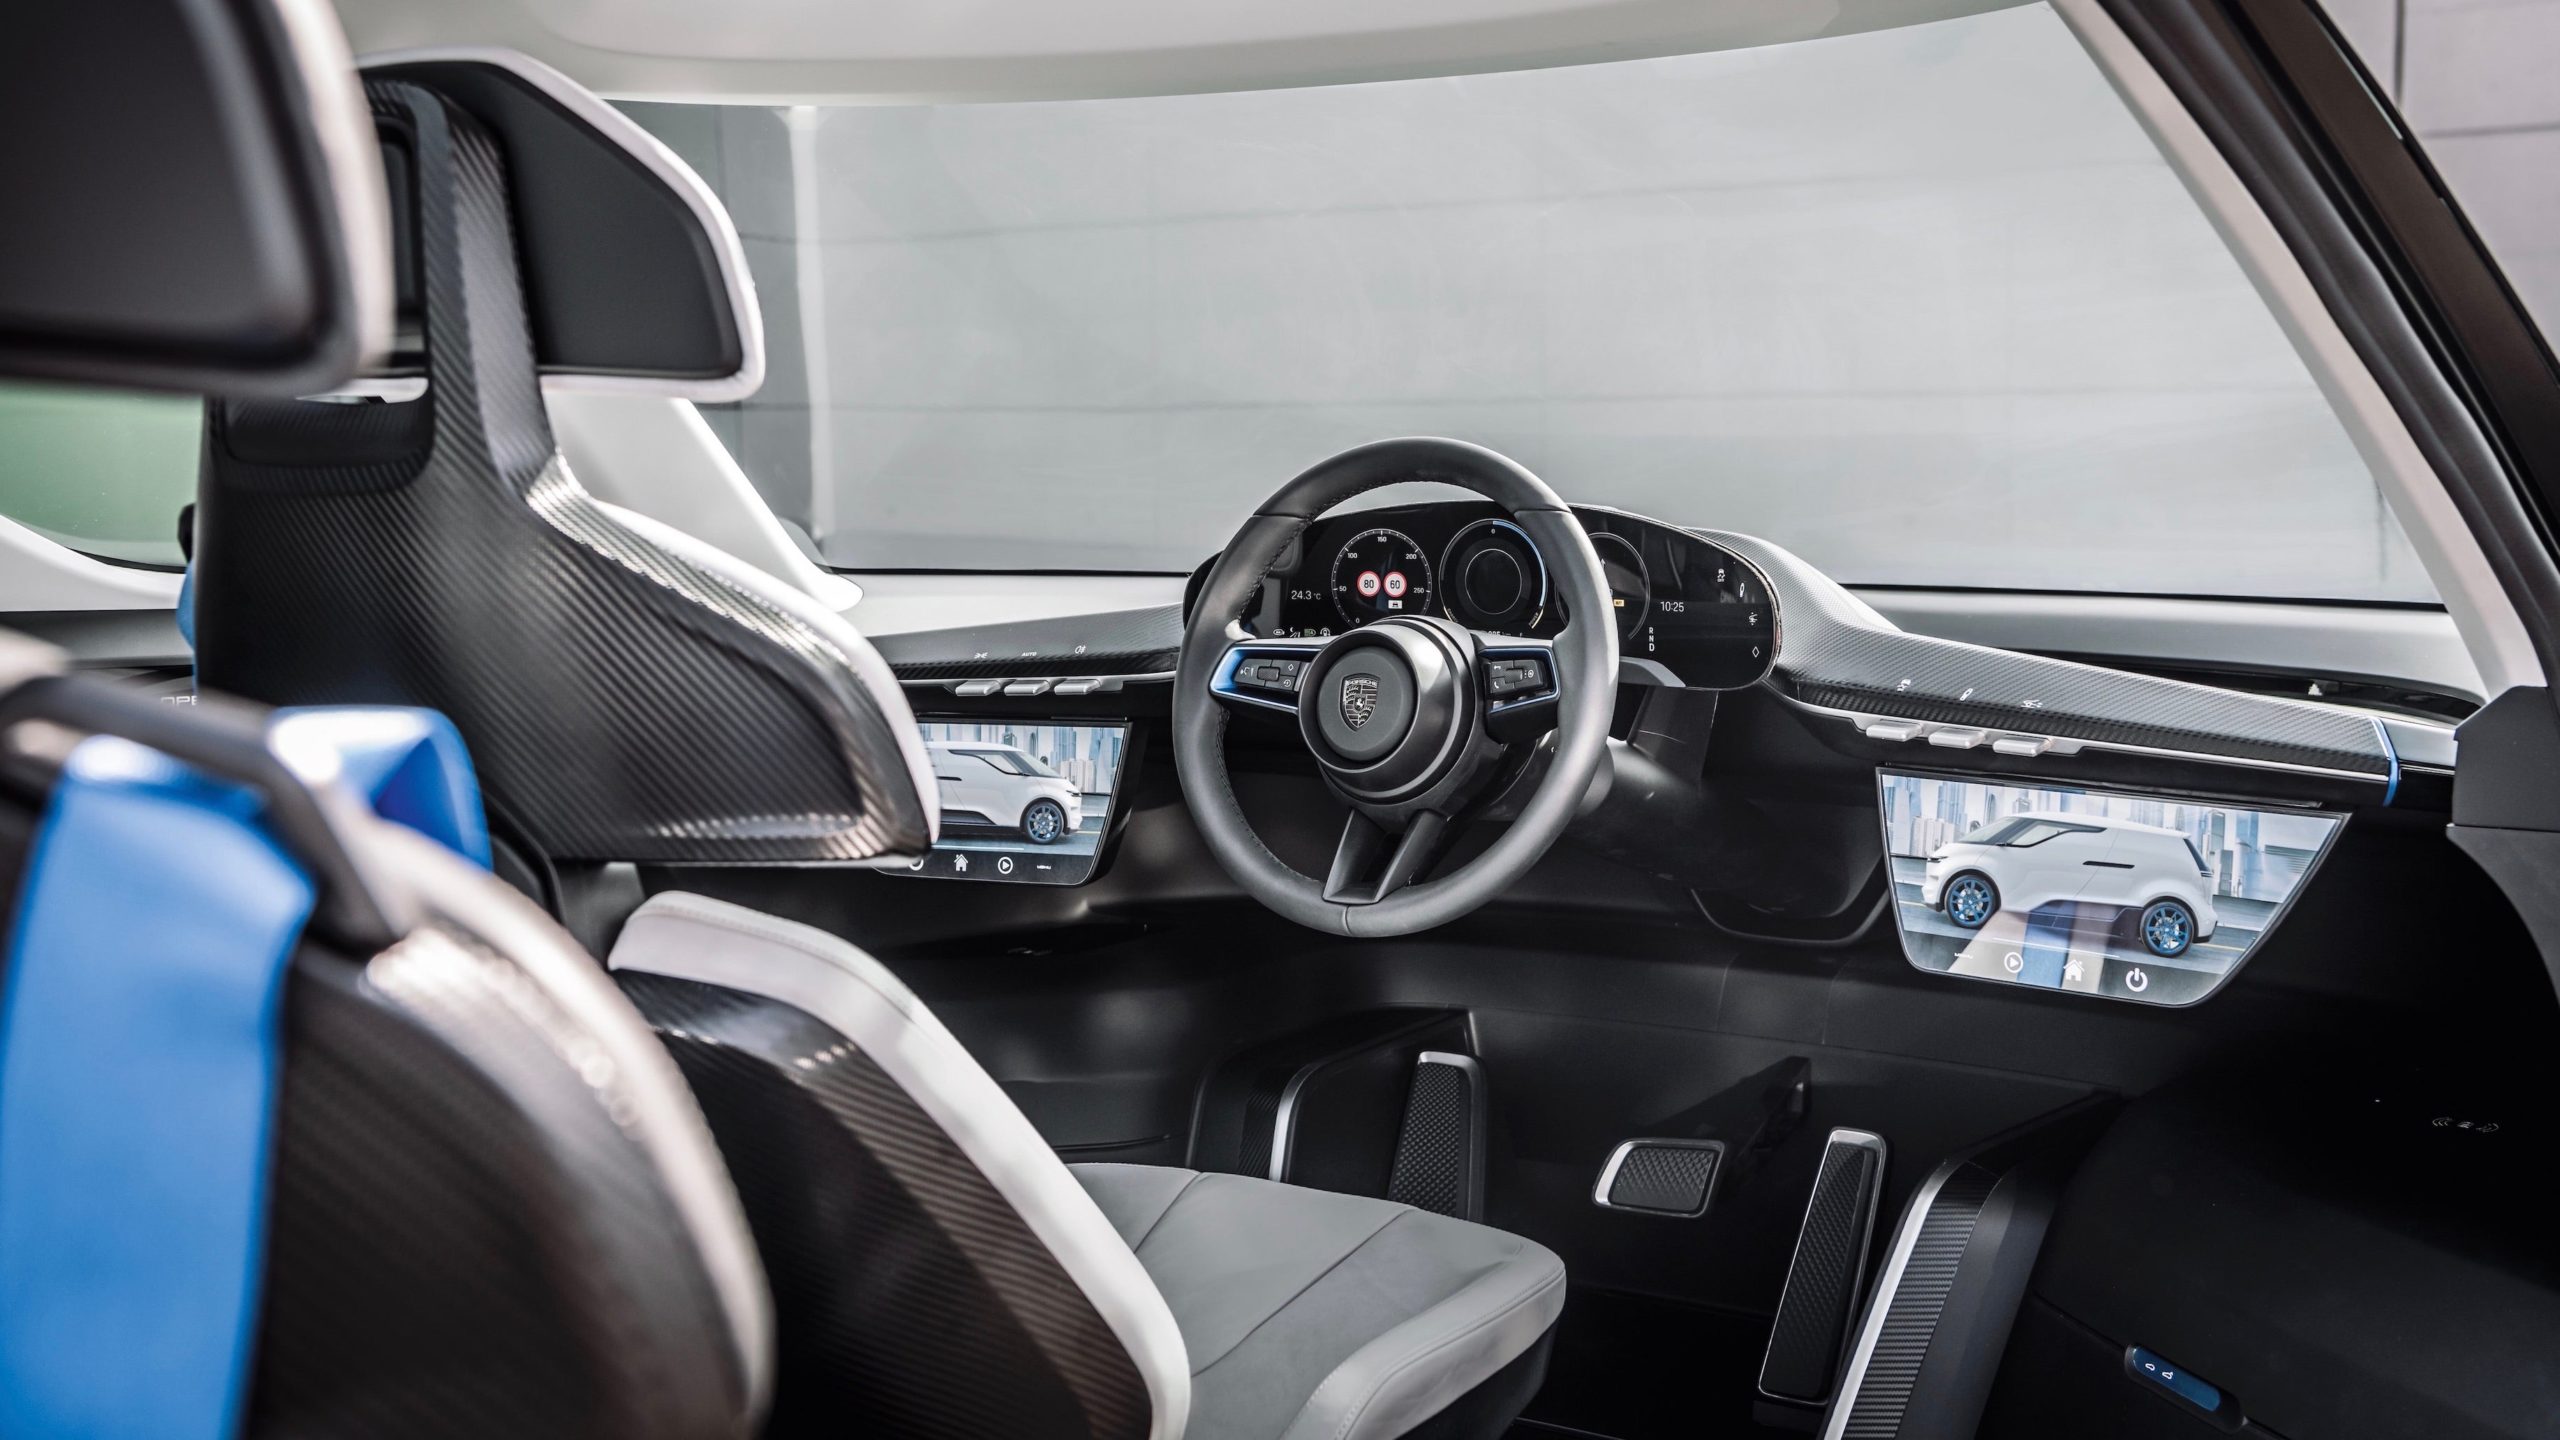 Porsche’s Minivan Has The Best Interior The Company Will Never Make